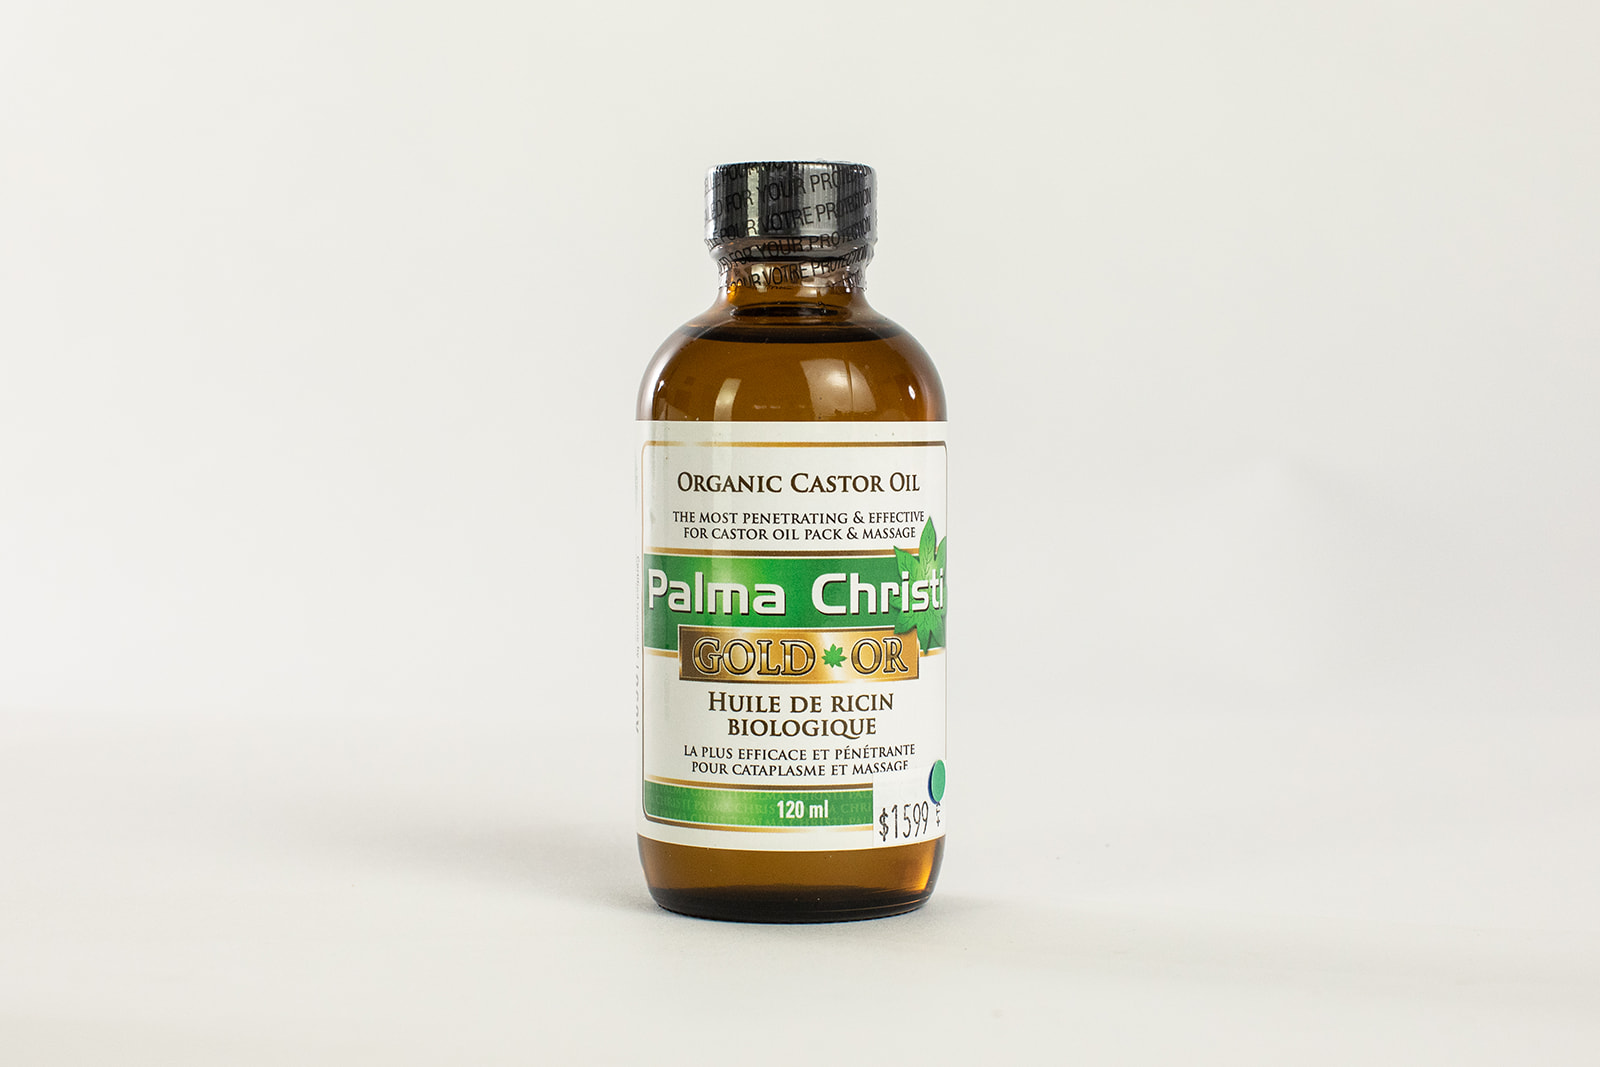 Palma Christi Castor Oil Gold (Organic) 120ml - Oral Health Shoppe